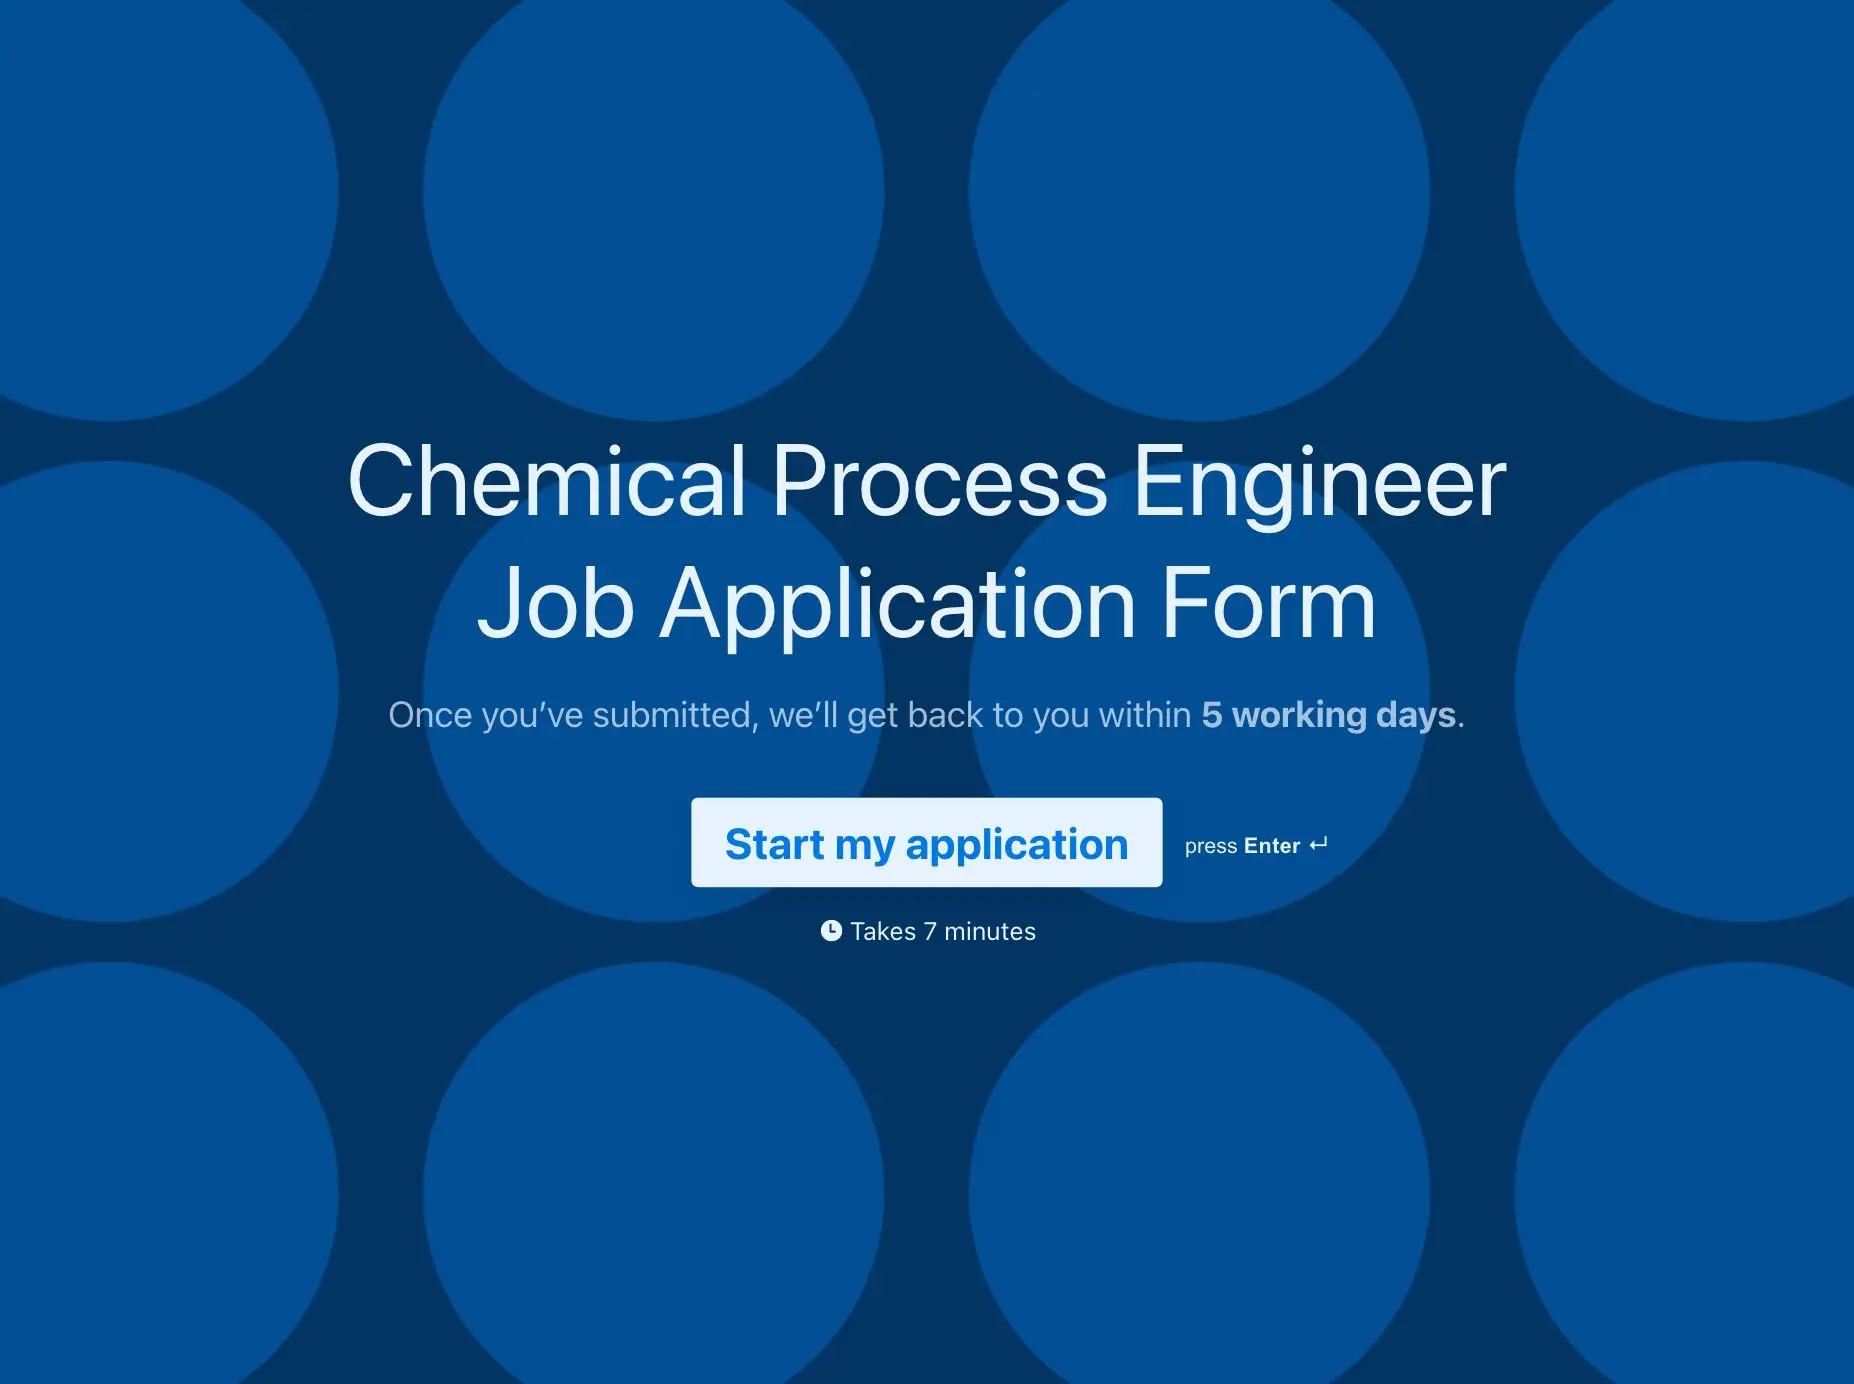 Chemical Process Engineer Job Application Form Template Hero